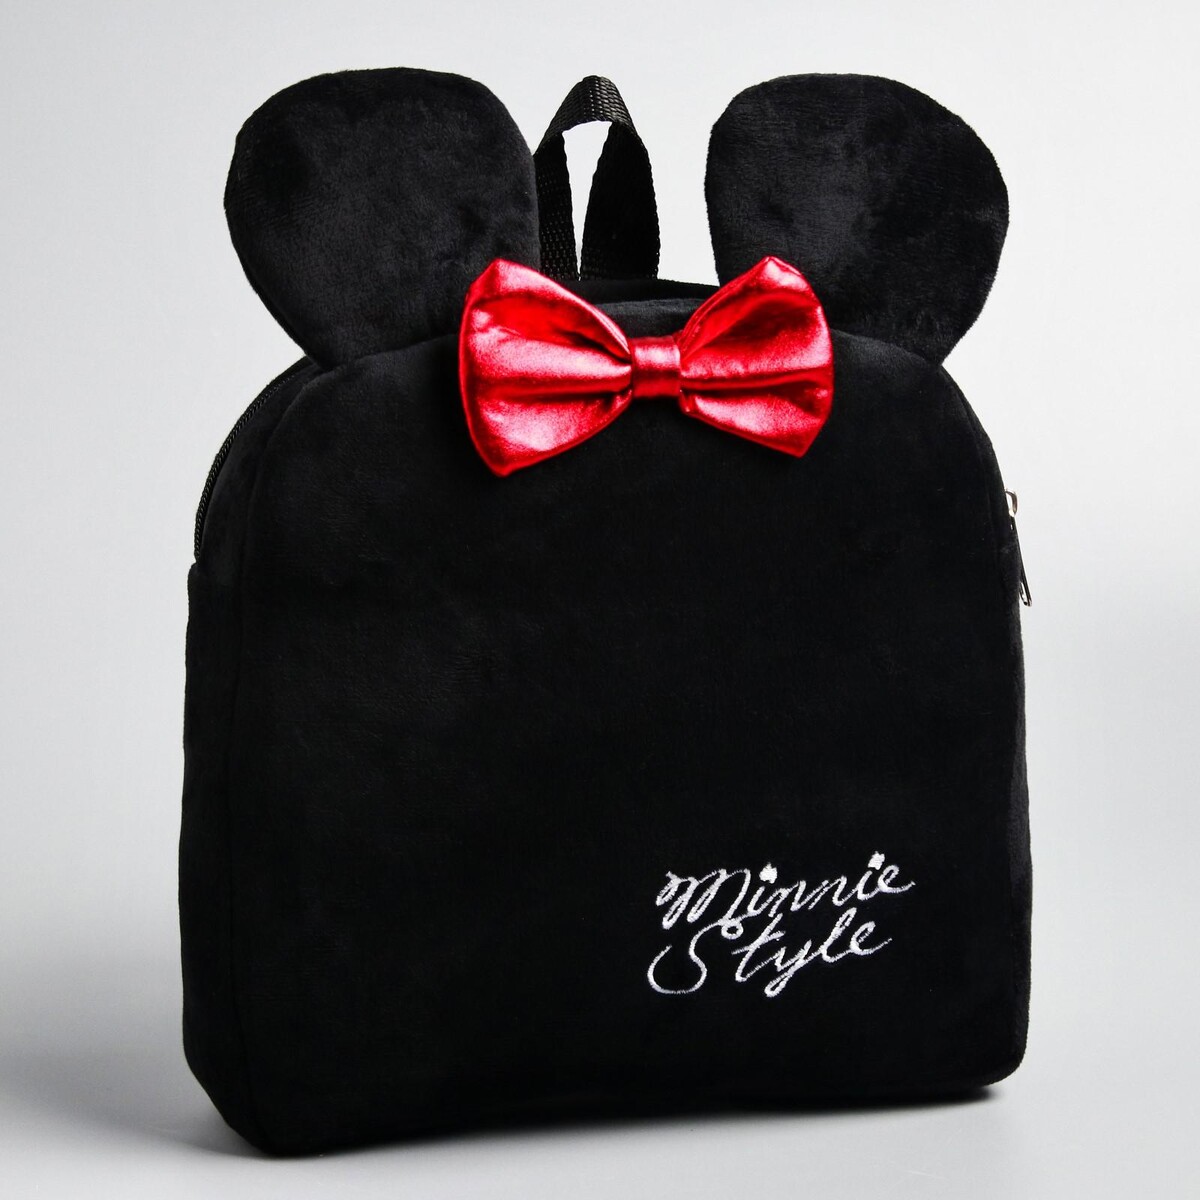 Рюкзак плюшевый, 19 см х 5 см х 21 см Disney